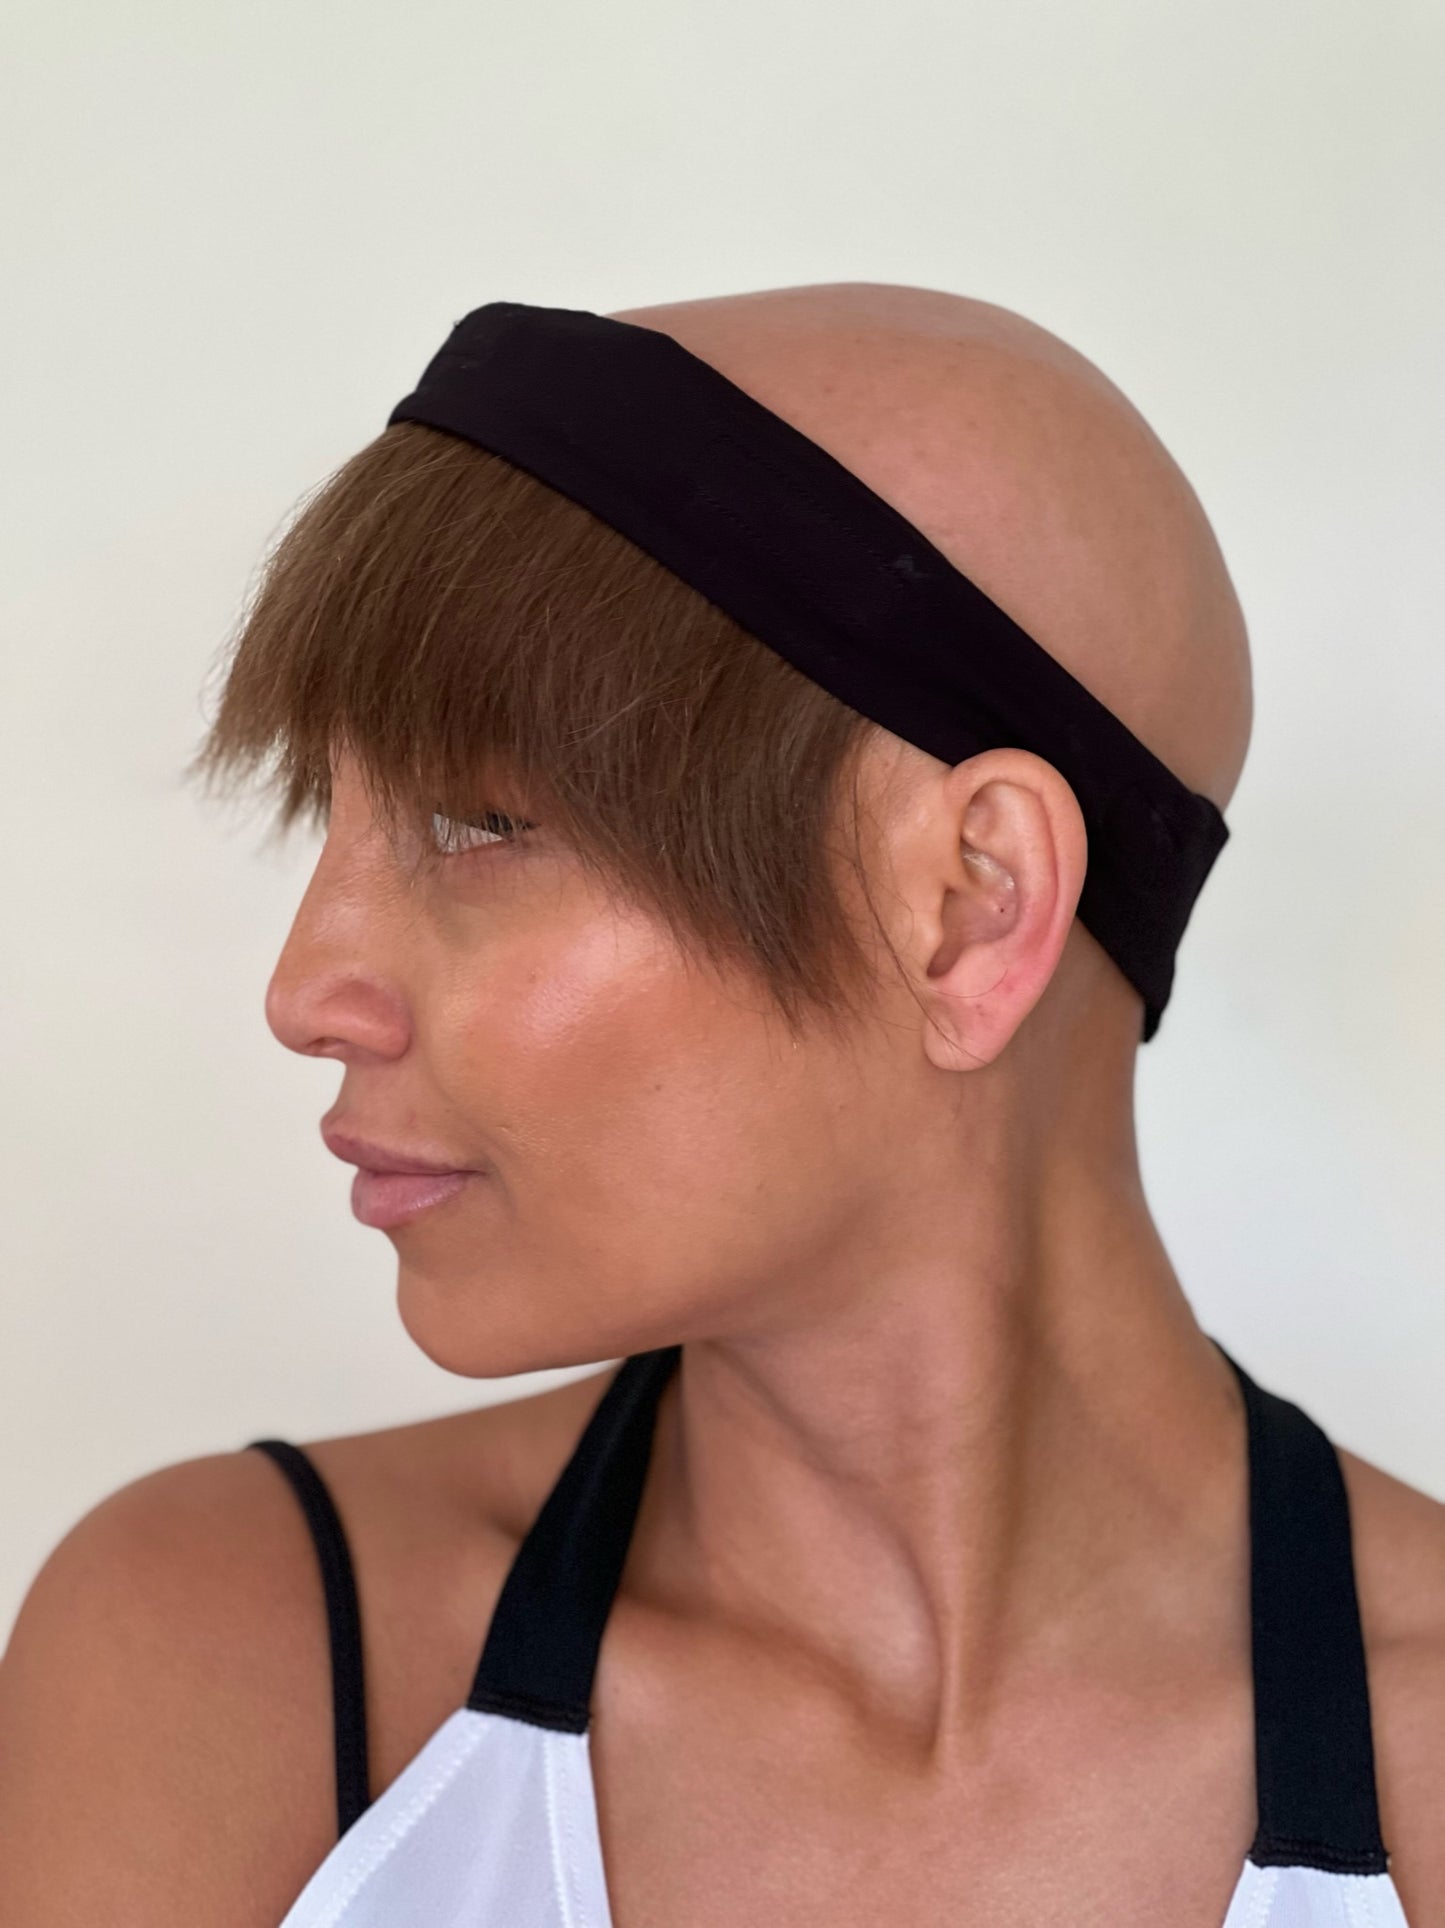 Human Hair Fringe for Under Hats - Short, Light Brown